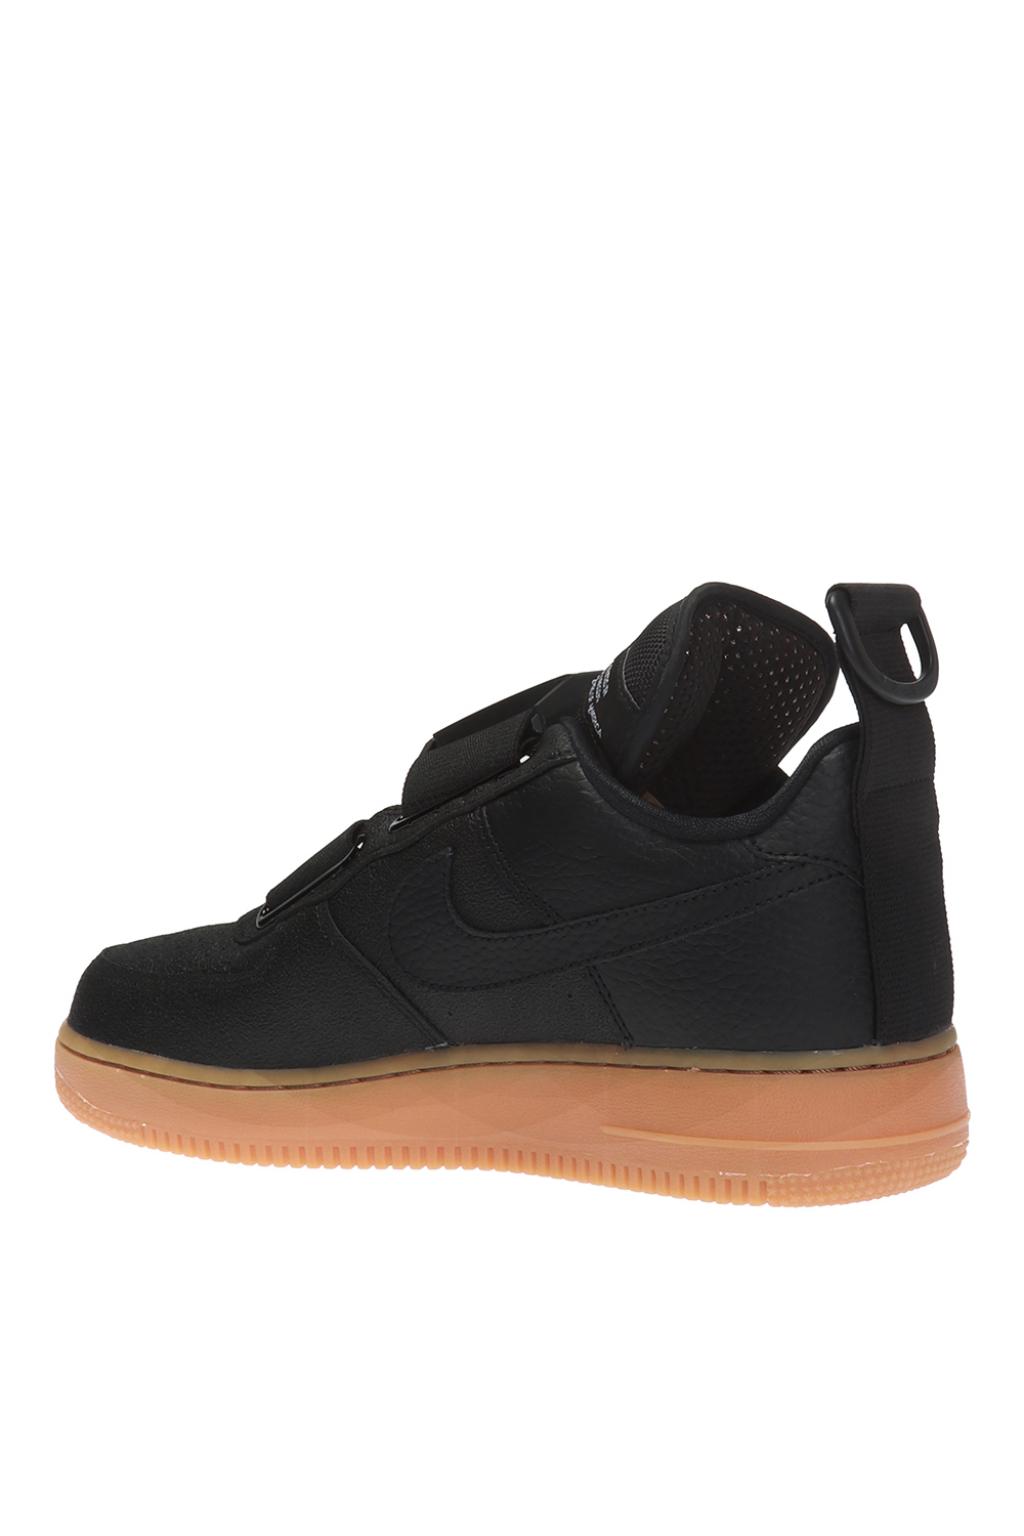 RARE Nike Air Force 1 Utility Black White Gum Mens Shoes AO1531 002 Size 9.5